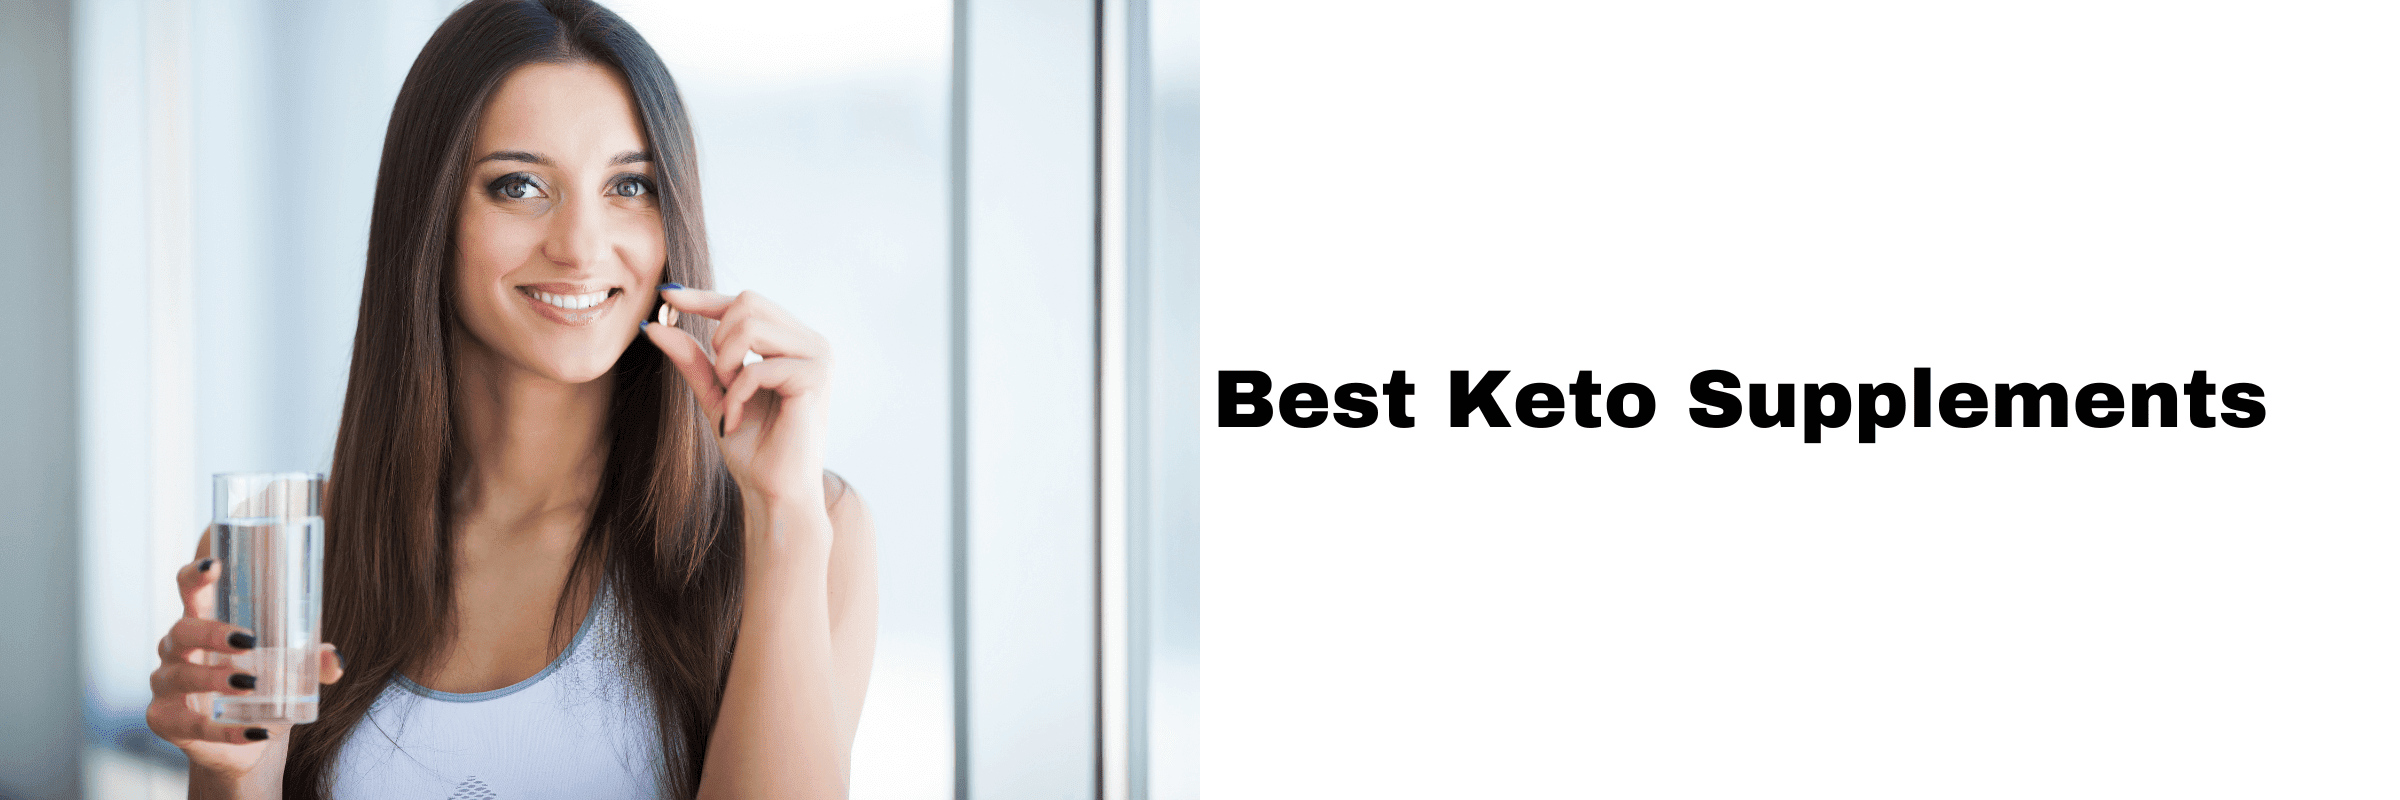 Best Keto Supplements (1)